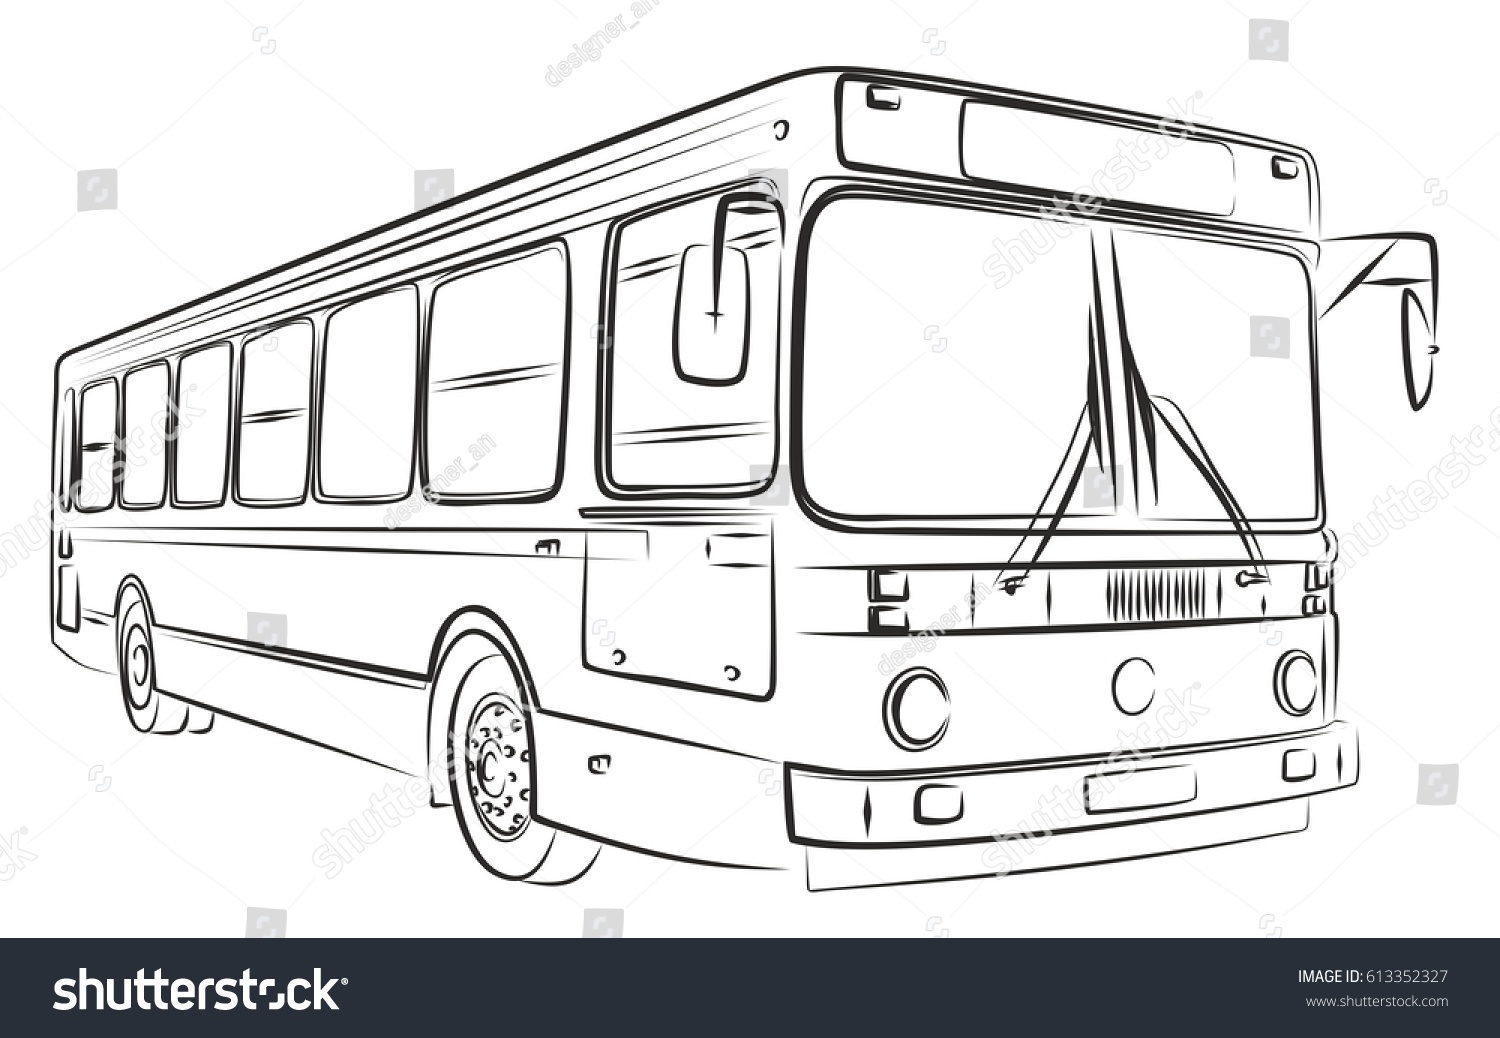 Раскраска автобус ЛИАЗ